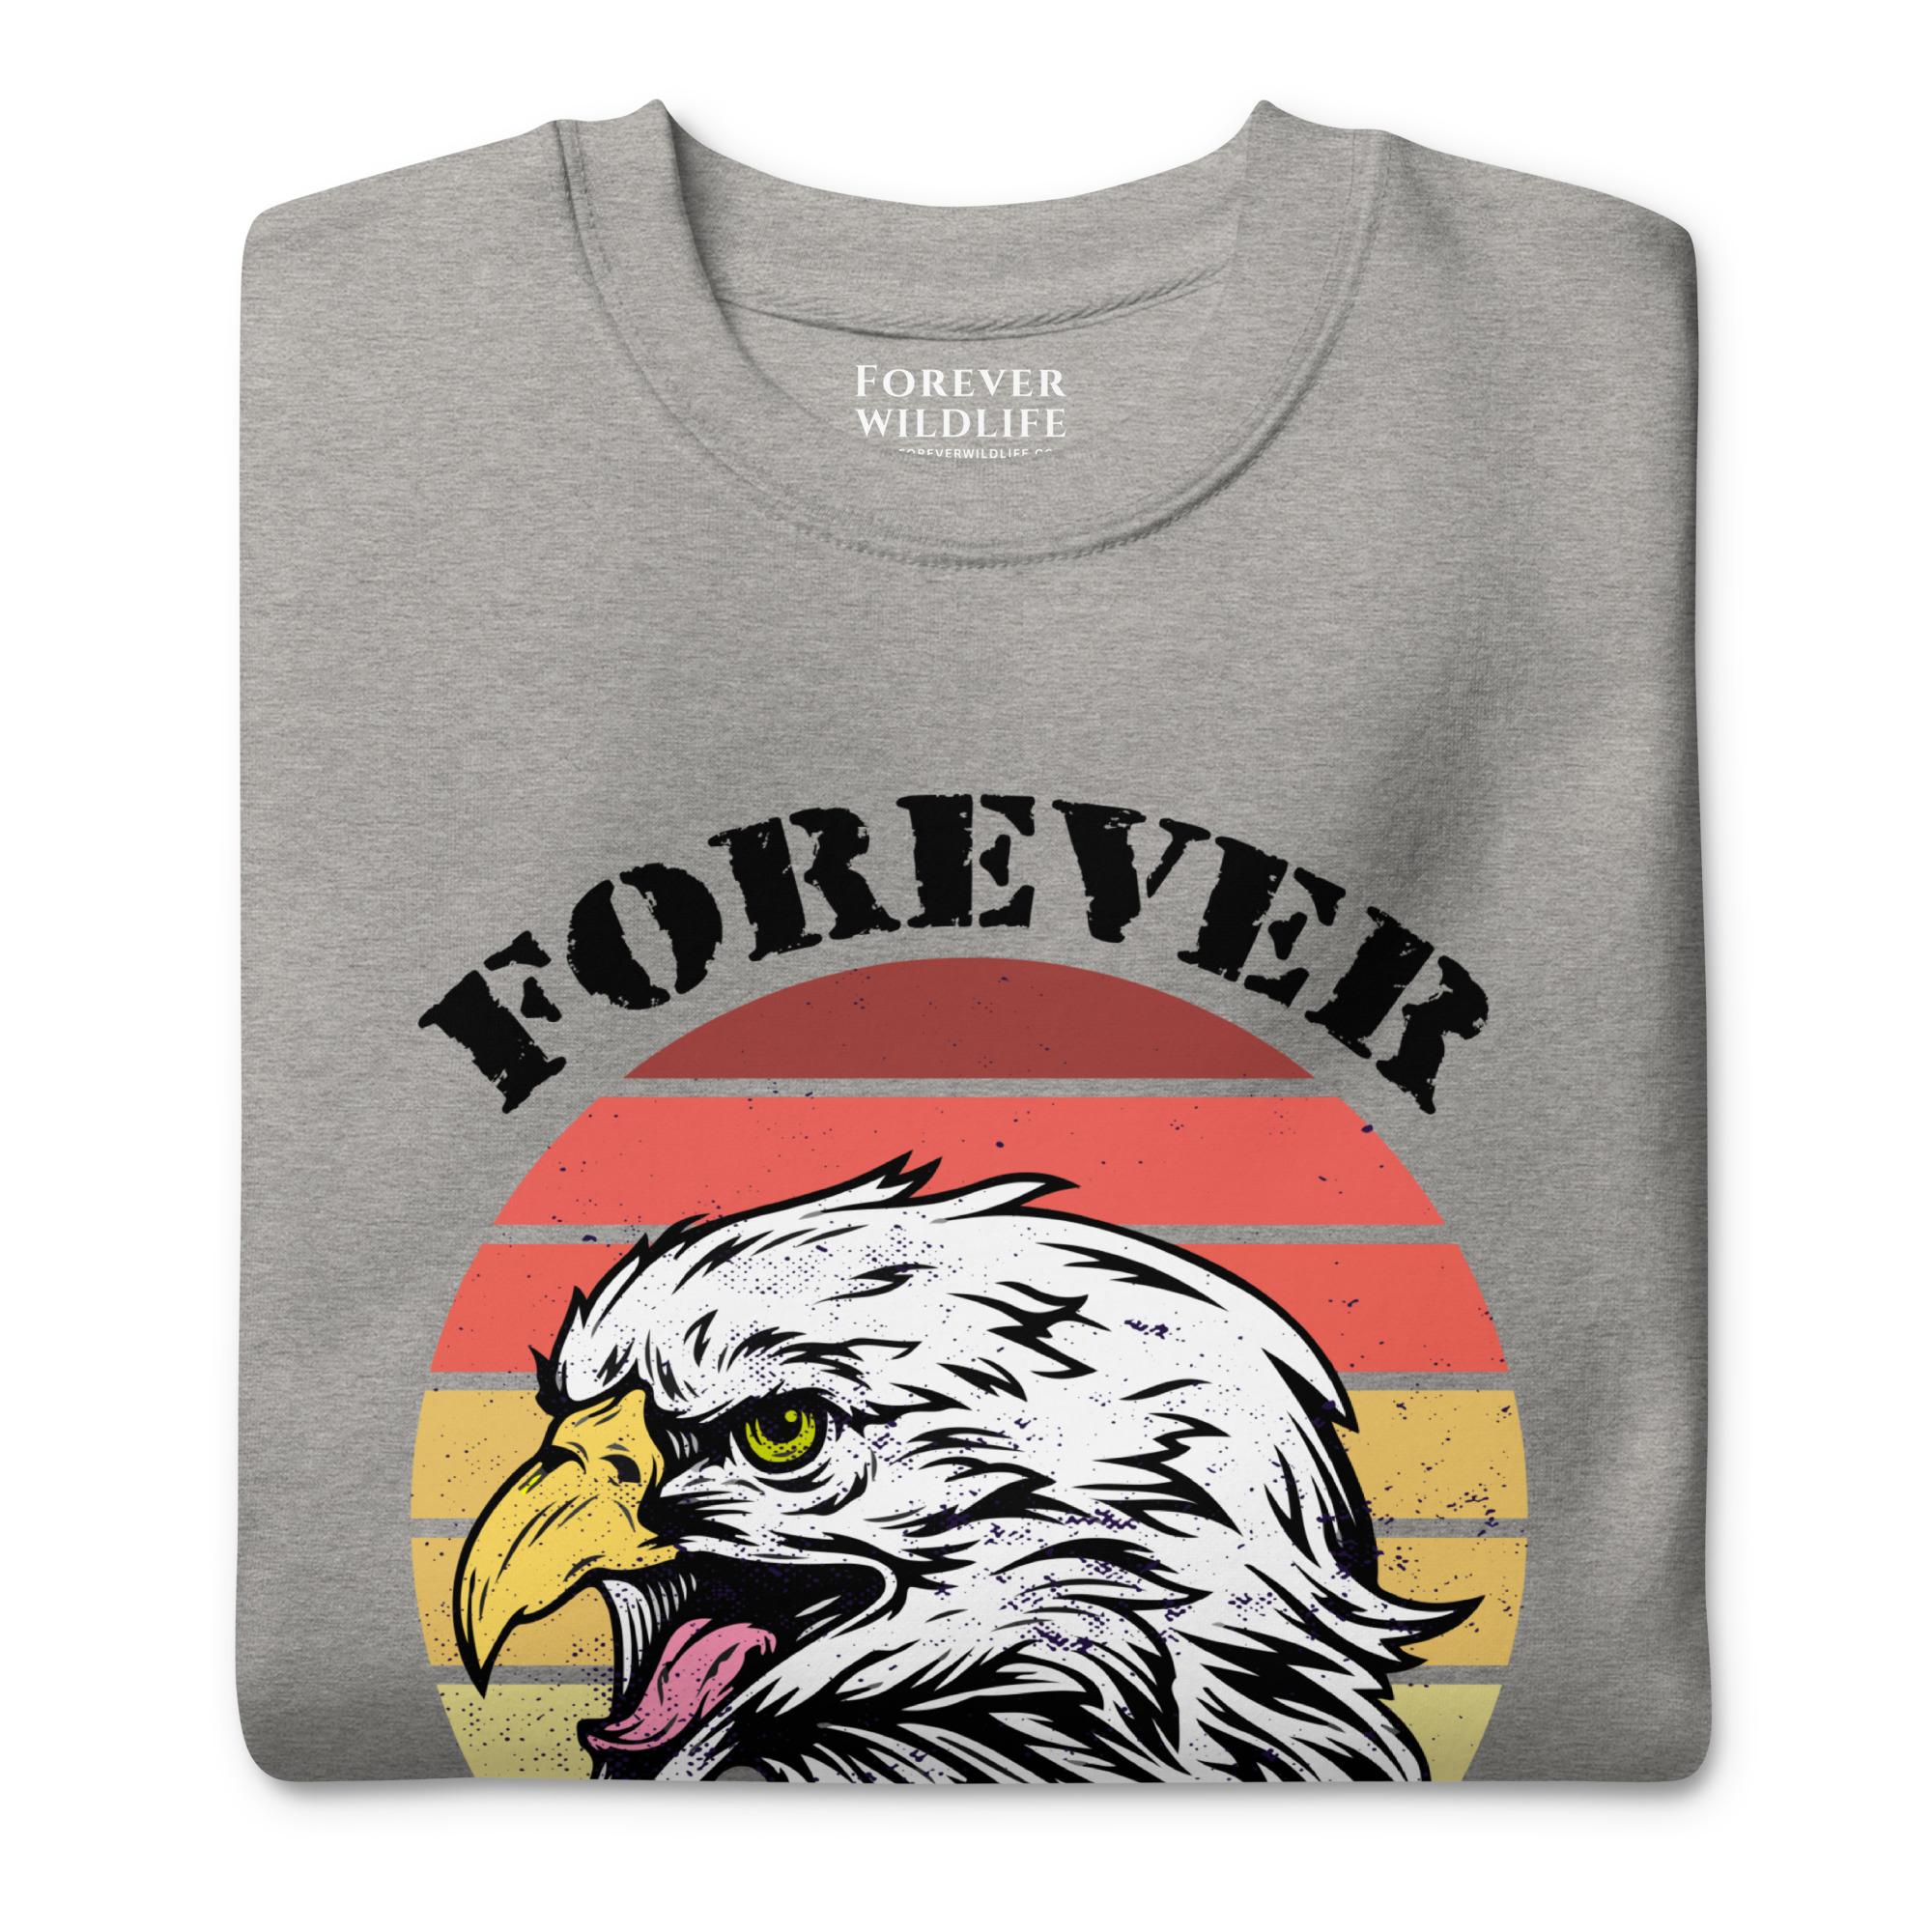 Eagle Sweatshirt in Grey-Premium Wildlife Animal Inspiration Sweatshirt Design, part of Wildlife Sweatshirts & Clothing from Forever Wildlife.